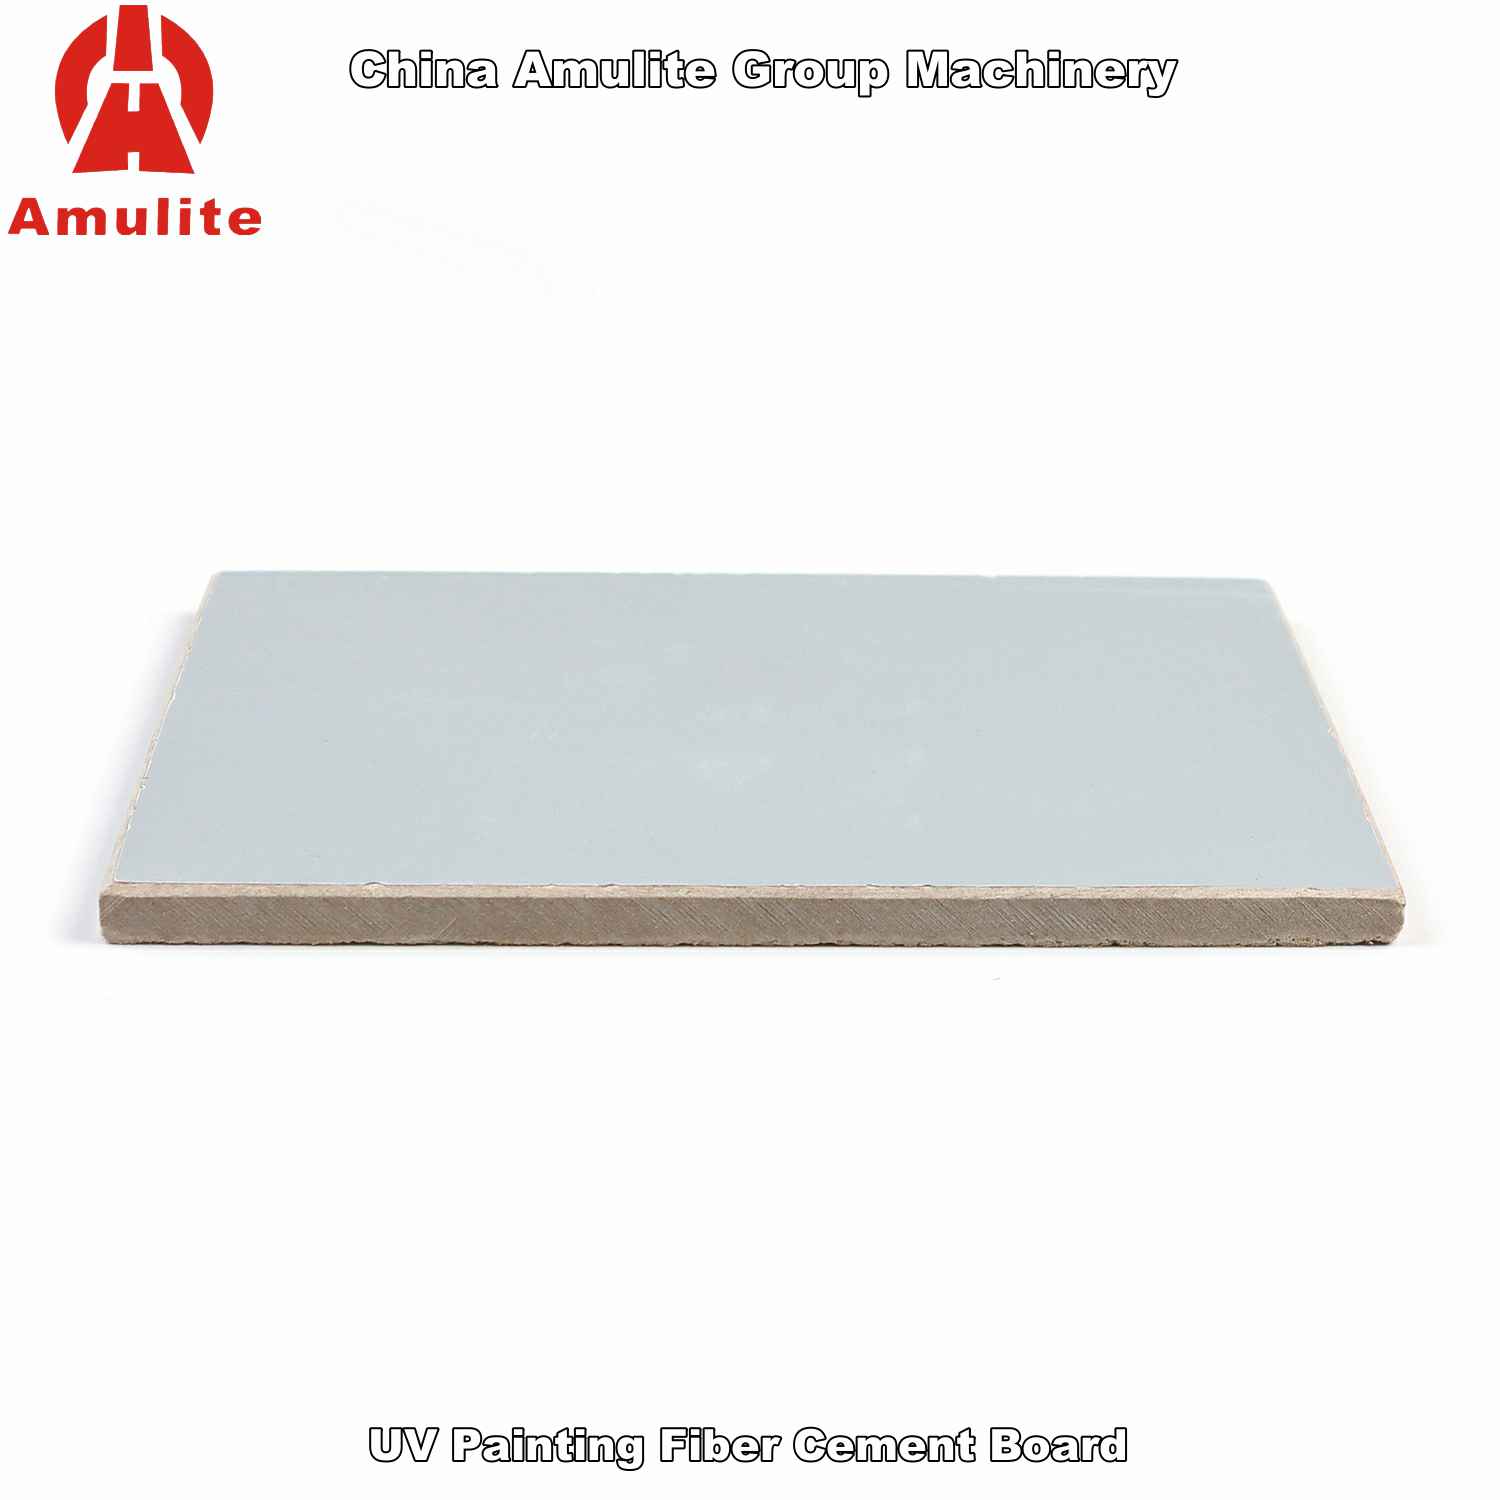 UV Painting Fiber Cement Board (8)